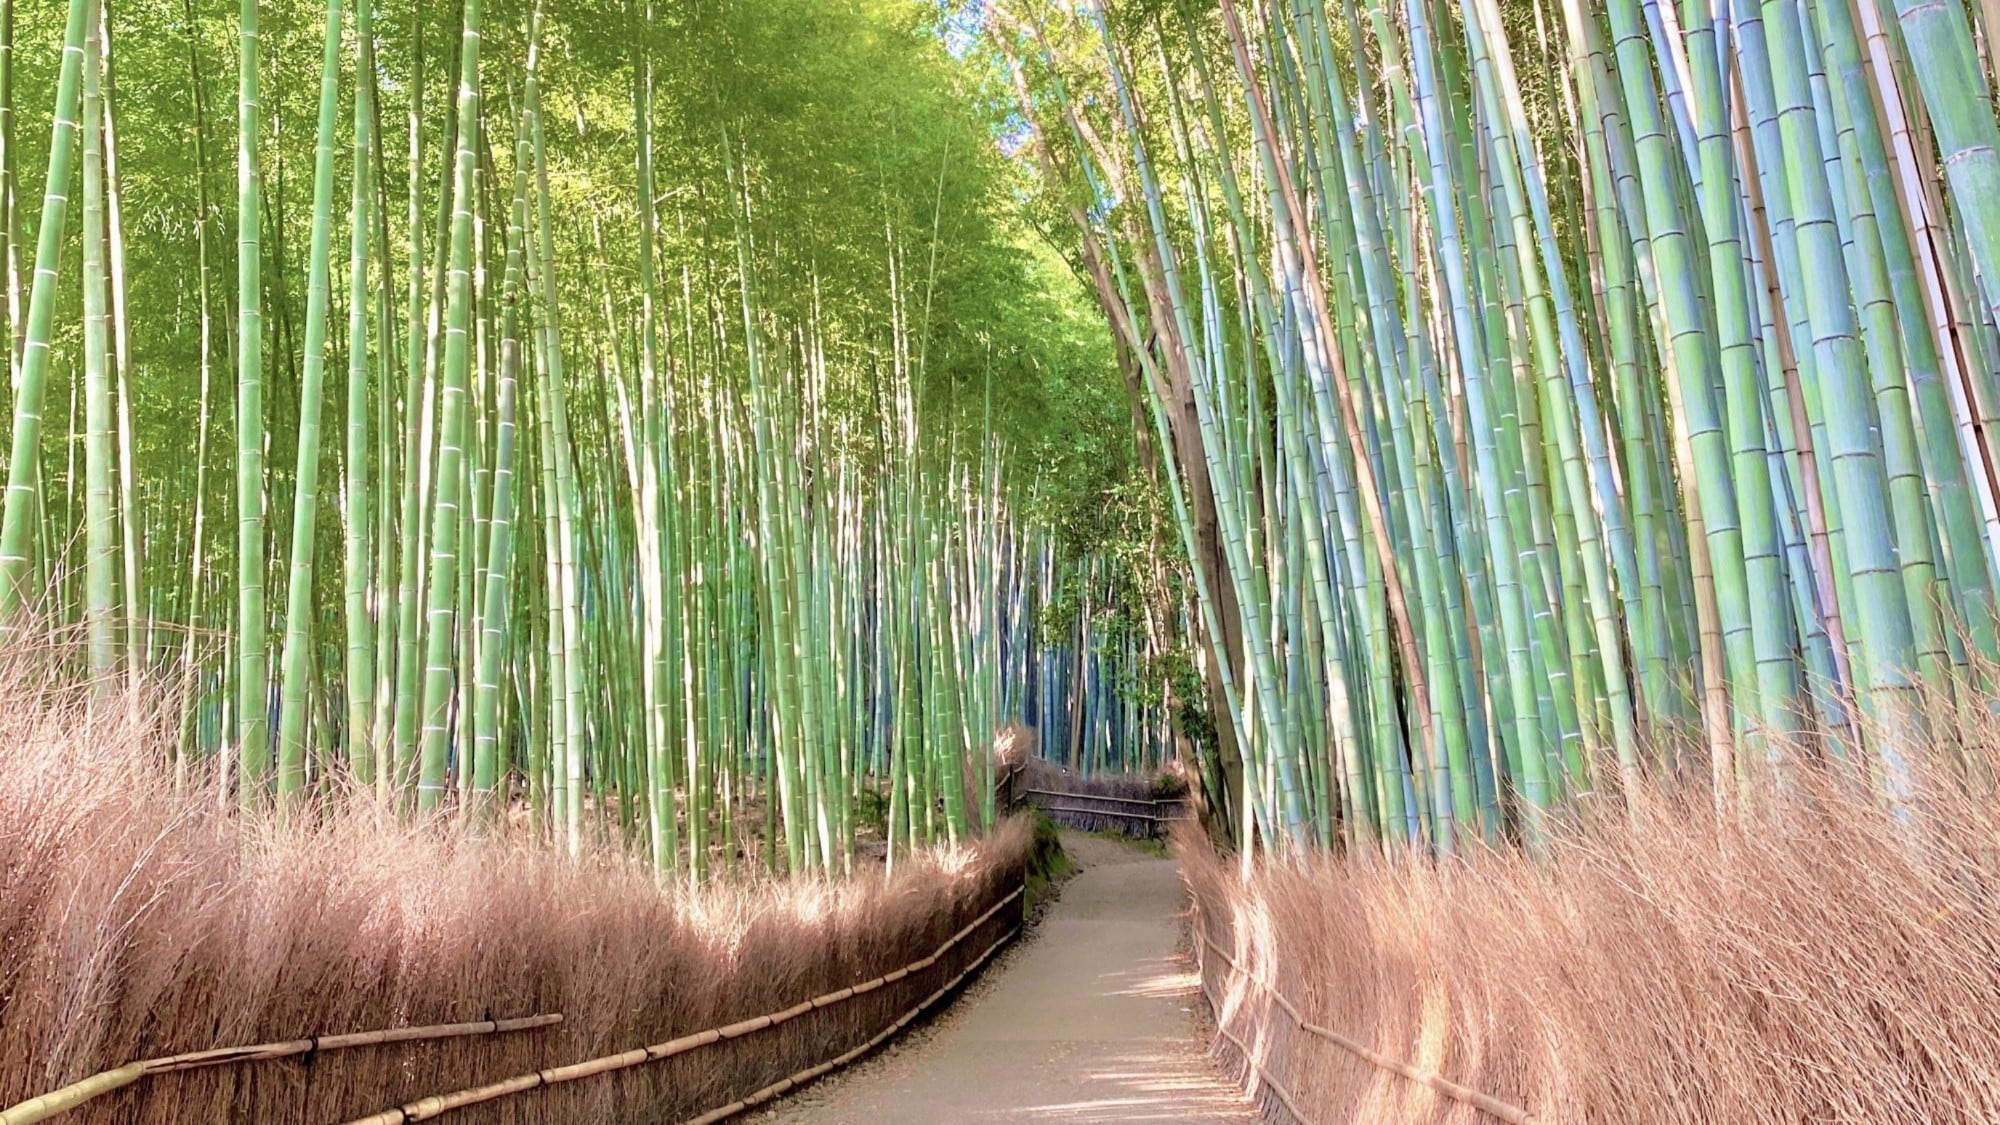 ◆ Small diameter of bamboo forest in Arashiyama